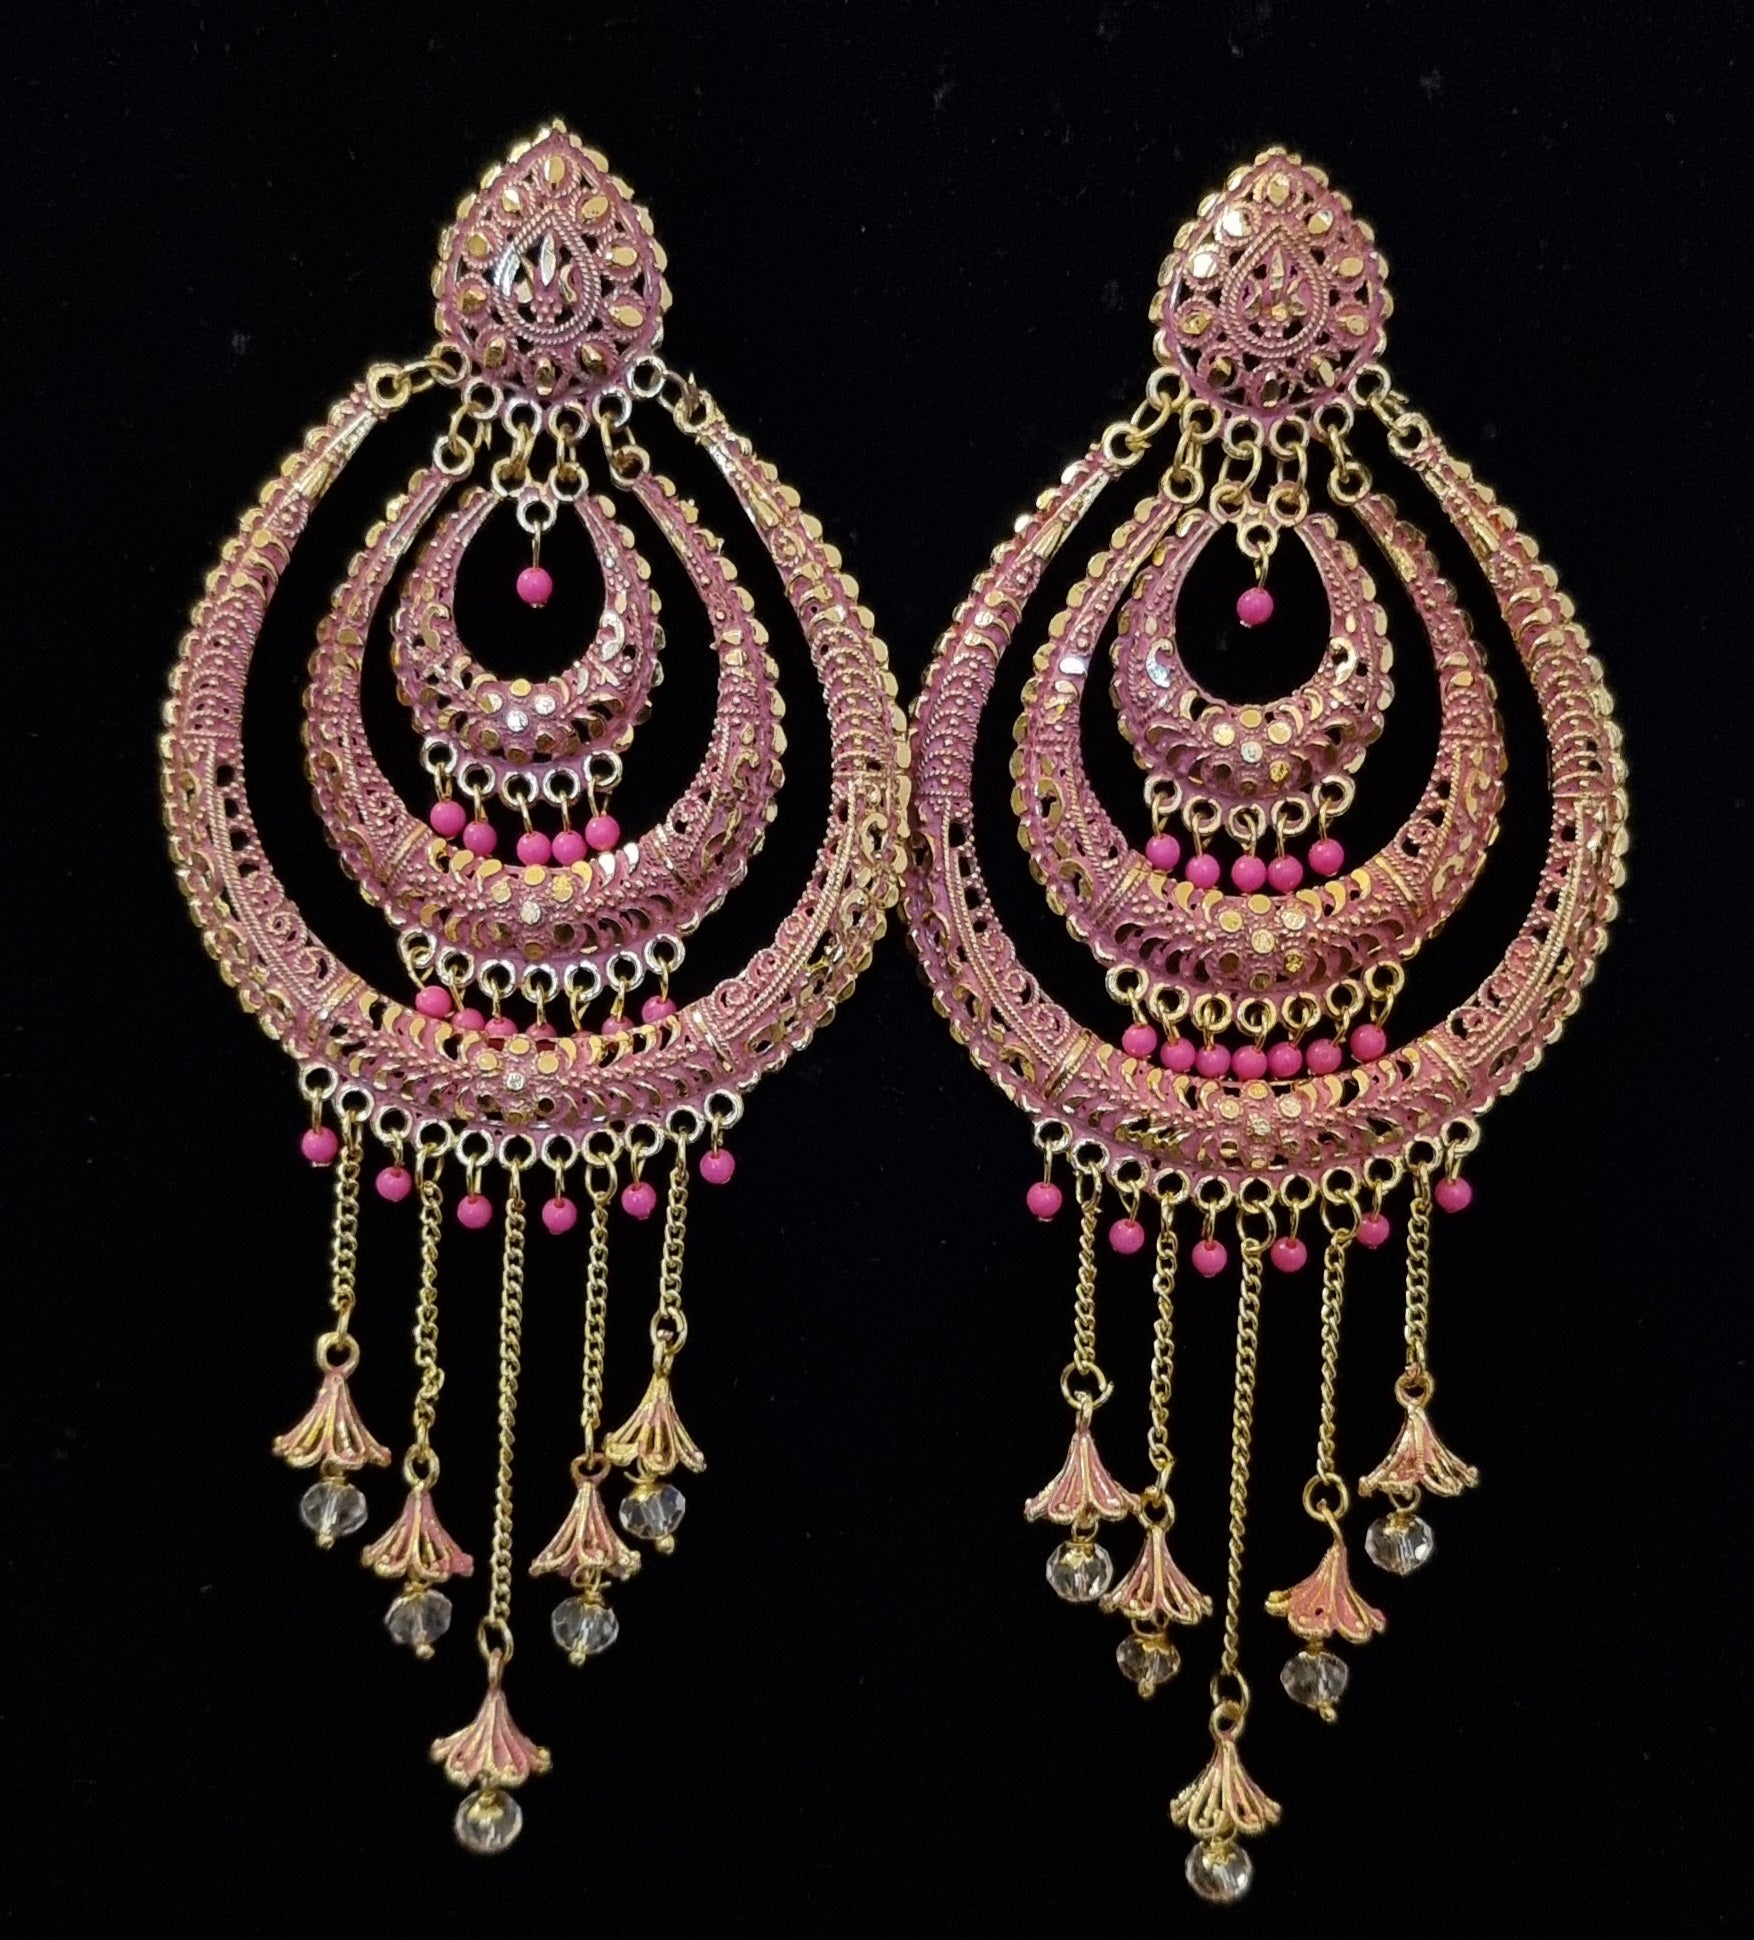 Long jhumka style earrings with tassels.